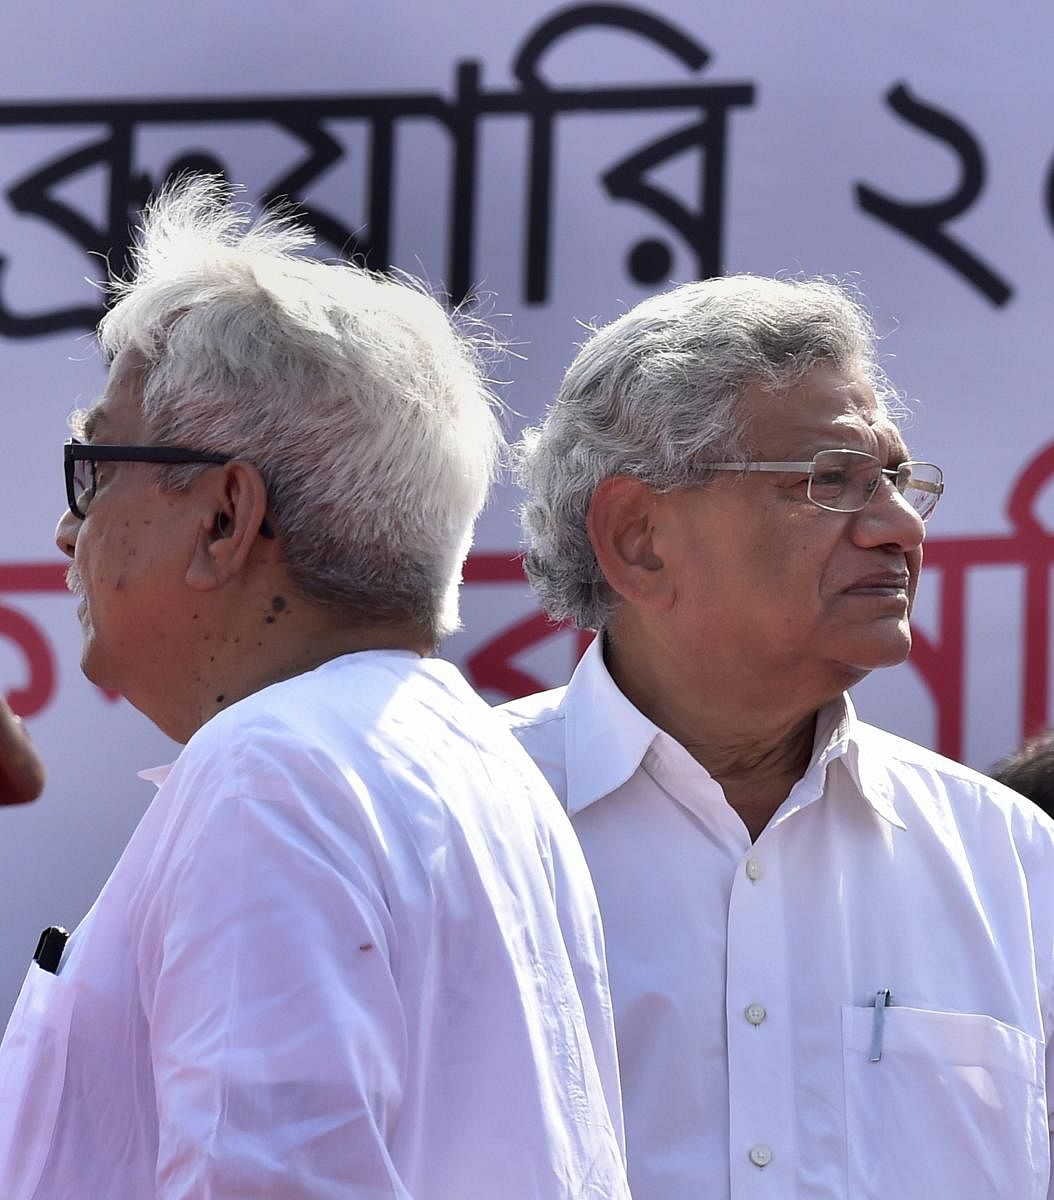 CPI(M) General Secretary Sitaram Yechury and Left Front chairman Biman Bose during a Left Front rally at Brigade Parade Ground in Kolkata, Sunday, Feb. 03, 2019. (PTI Photo)